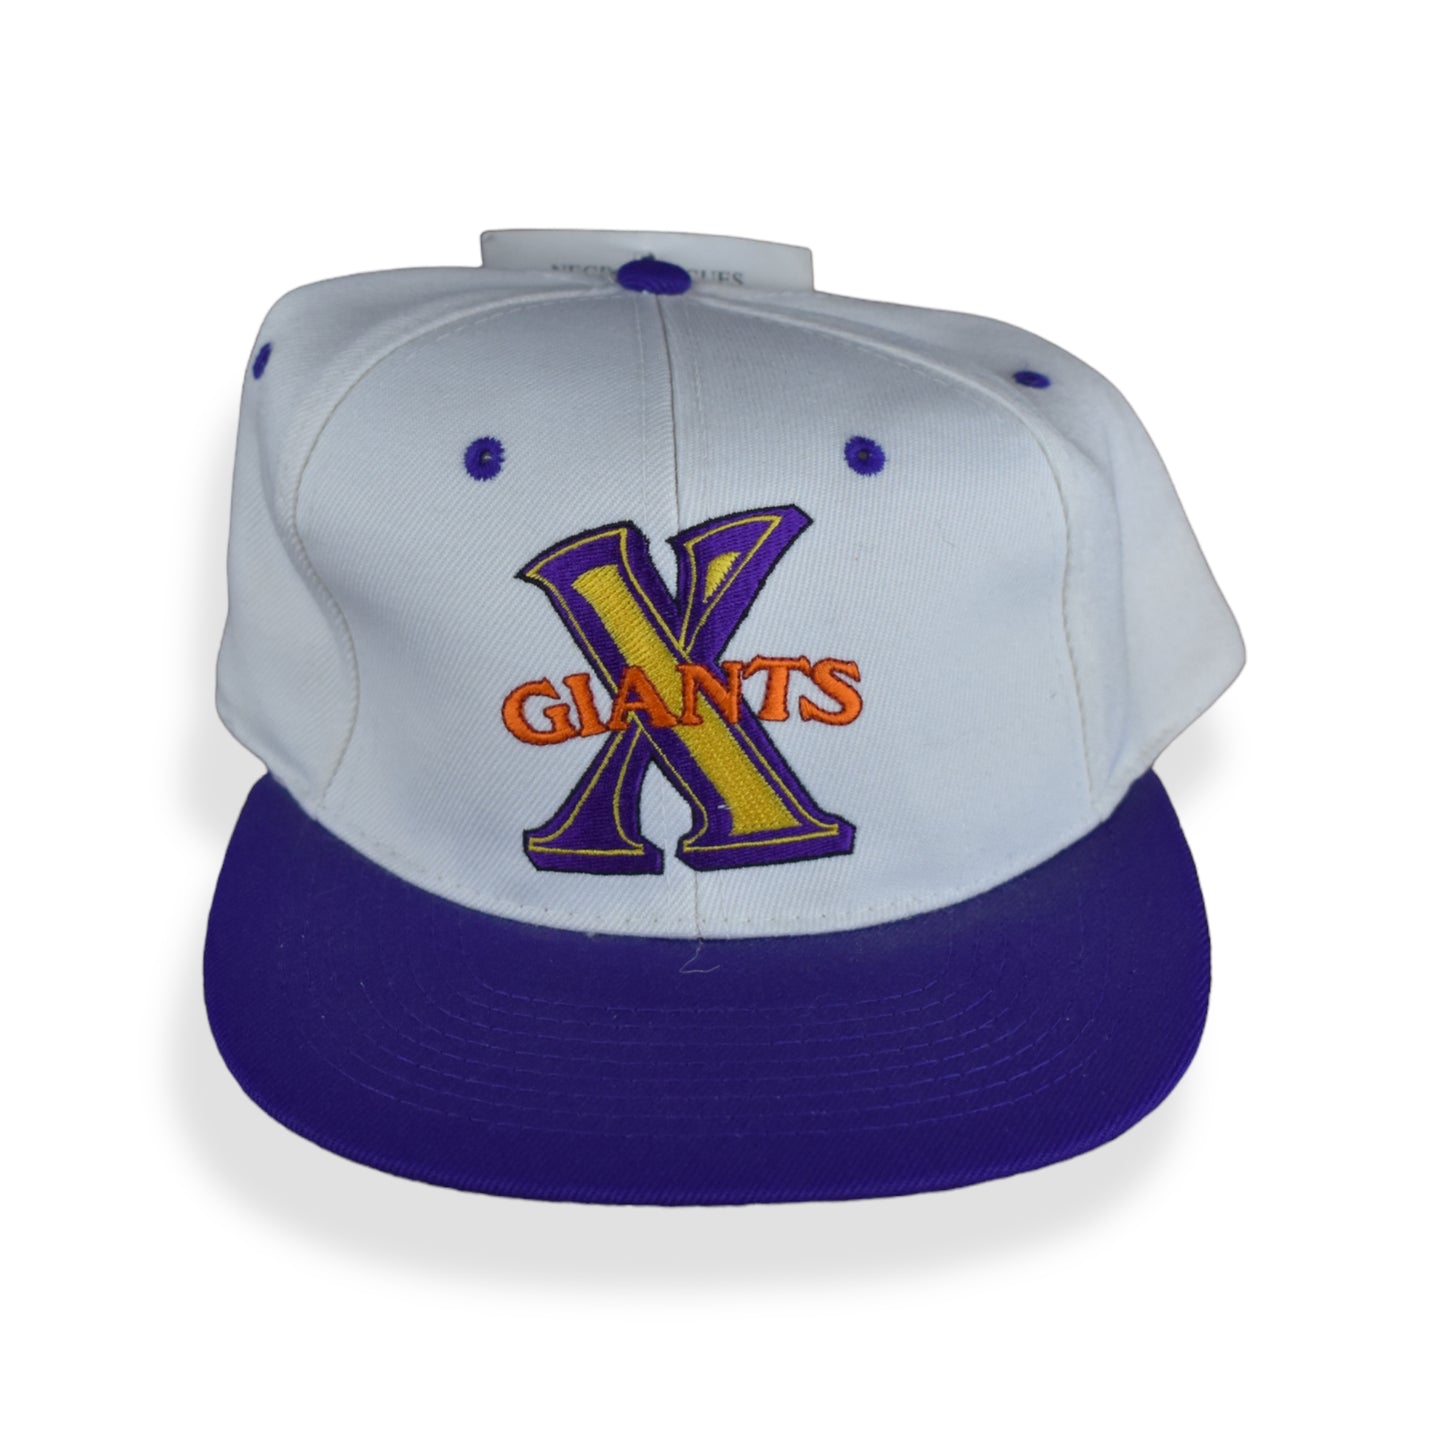 ‘90s Giants Negro League Hat